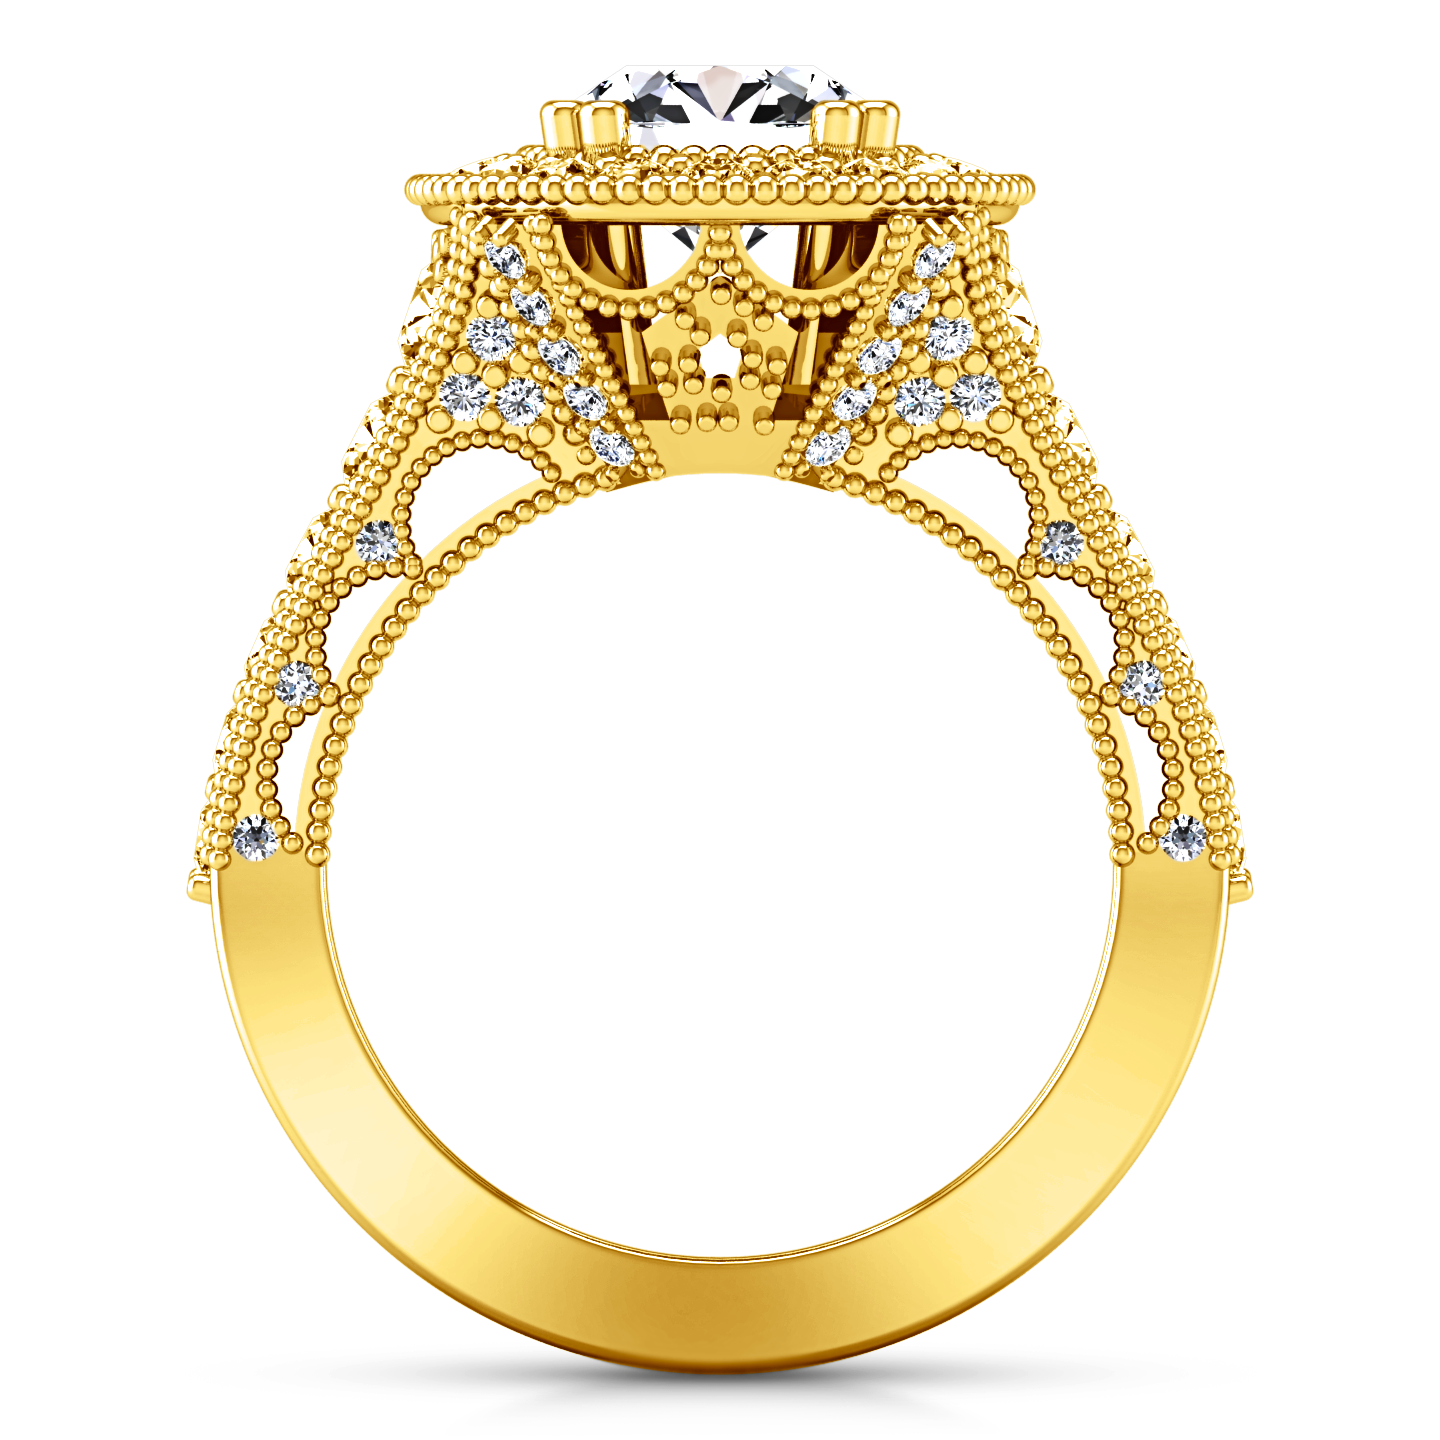 Halo Engagement Ring Angeline